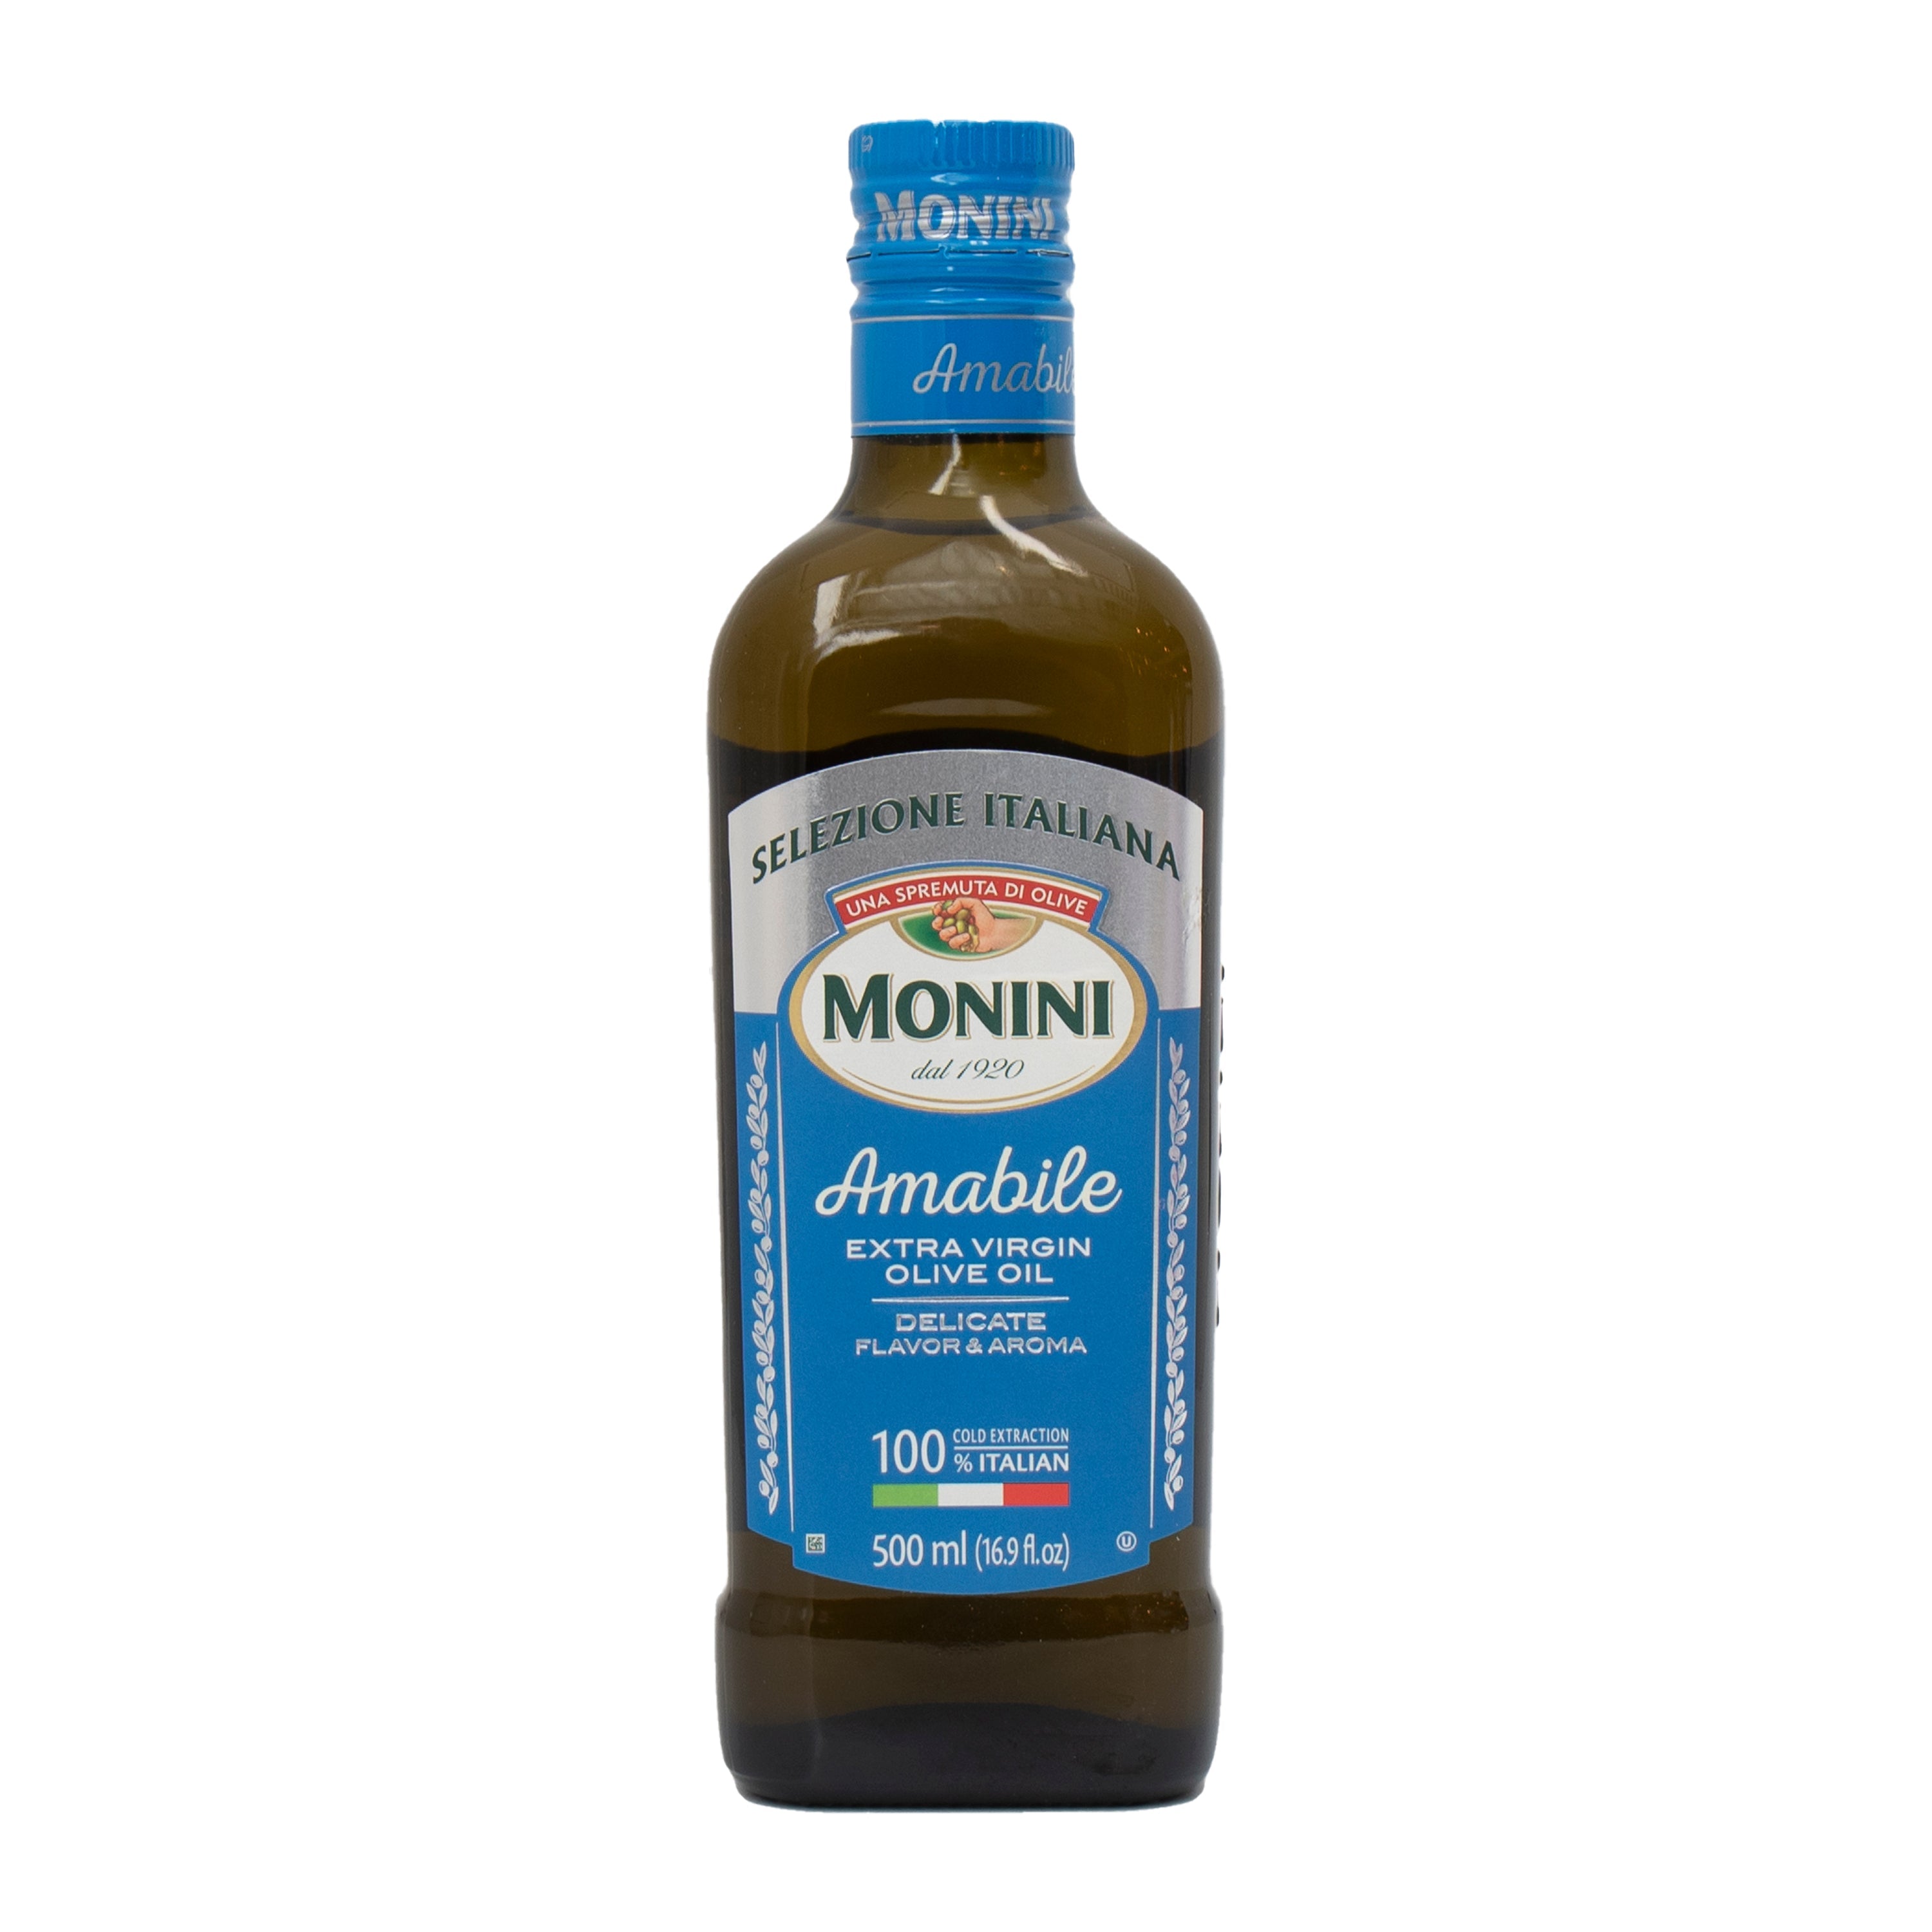 Monini Amabile Premium Extra Virgin Olive Oil 500ml